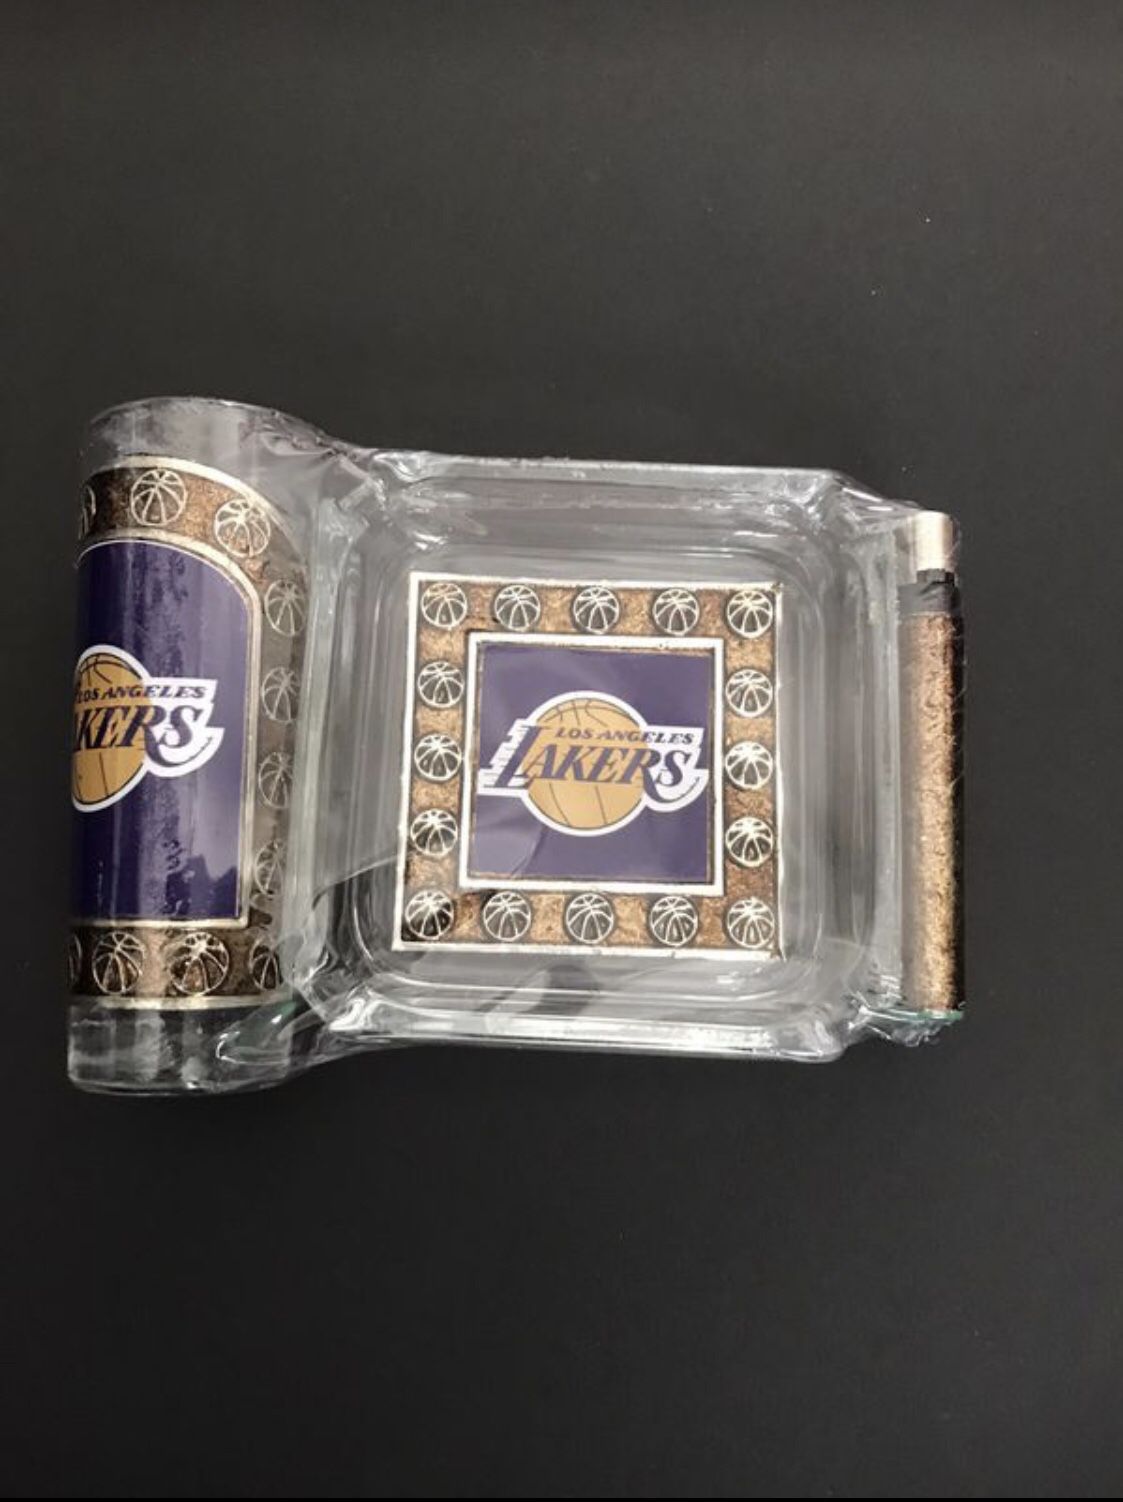 Los Angeles Lakers ashtray set